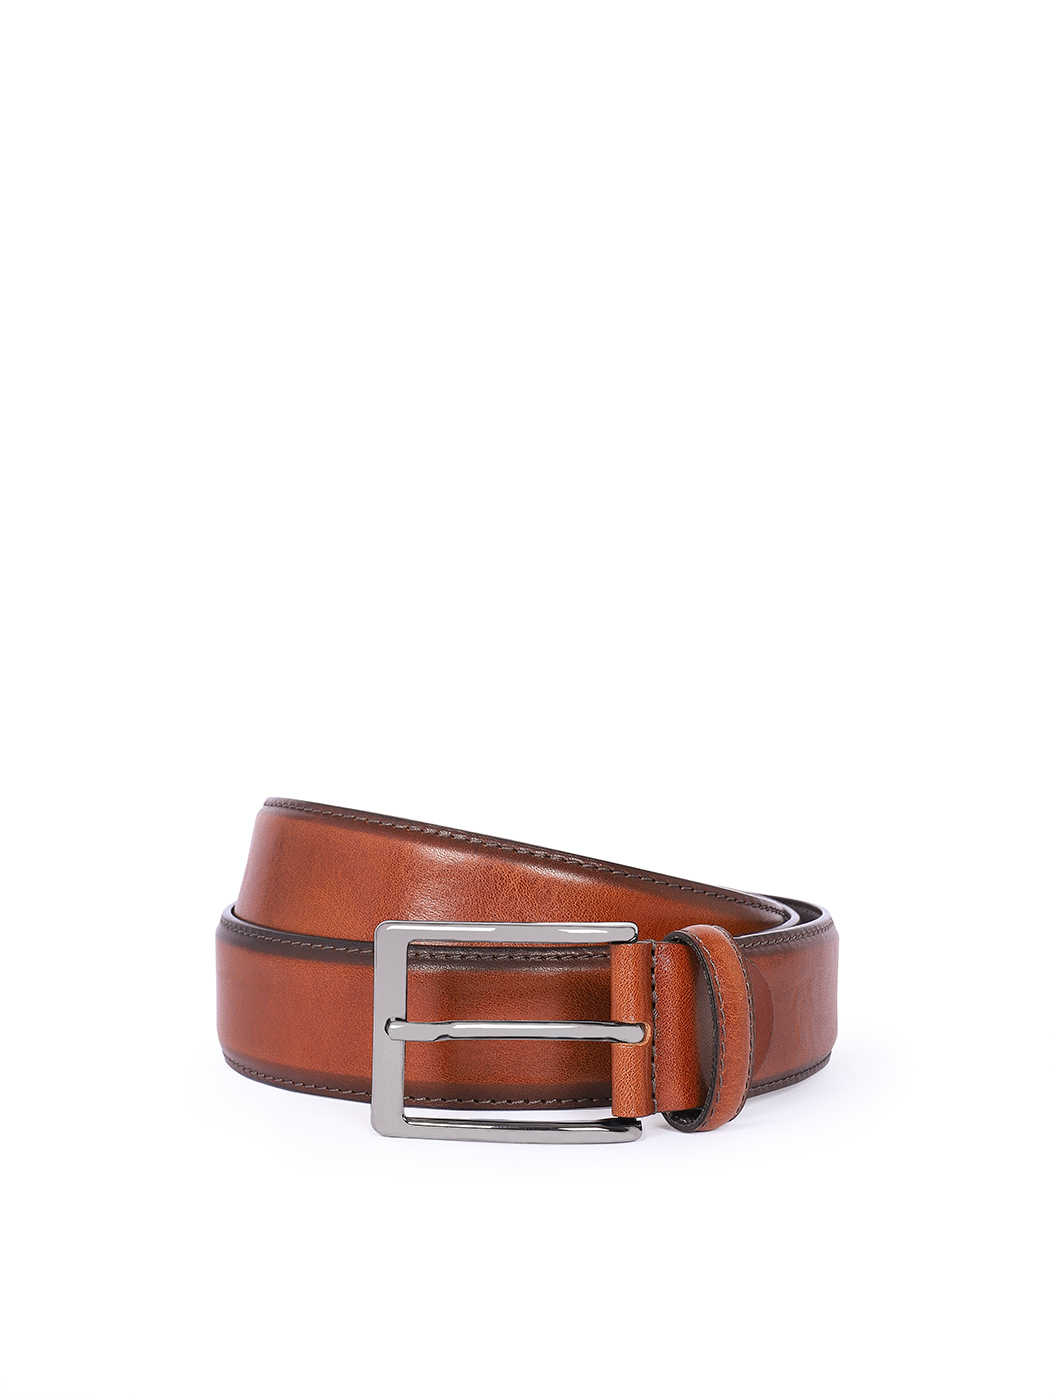 Classic 3.5 cm Width Leather Belt Brown